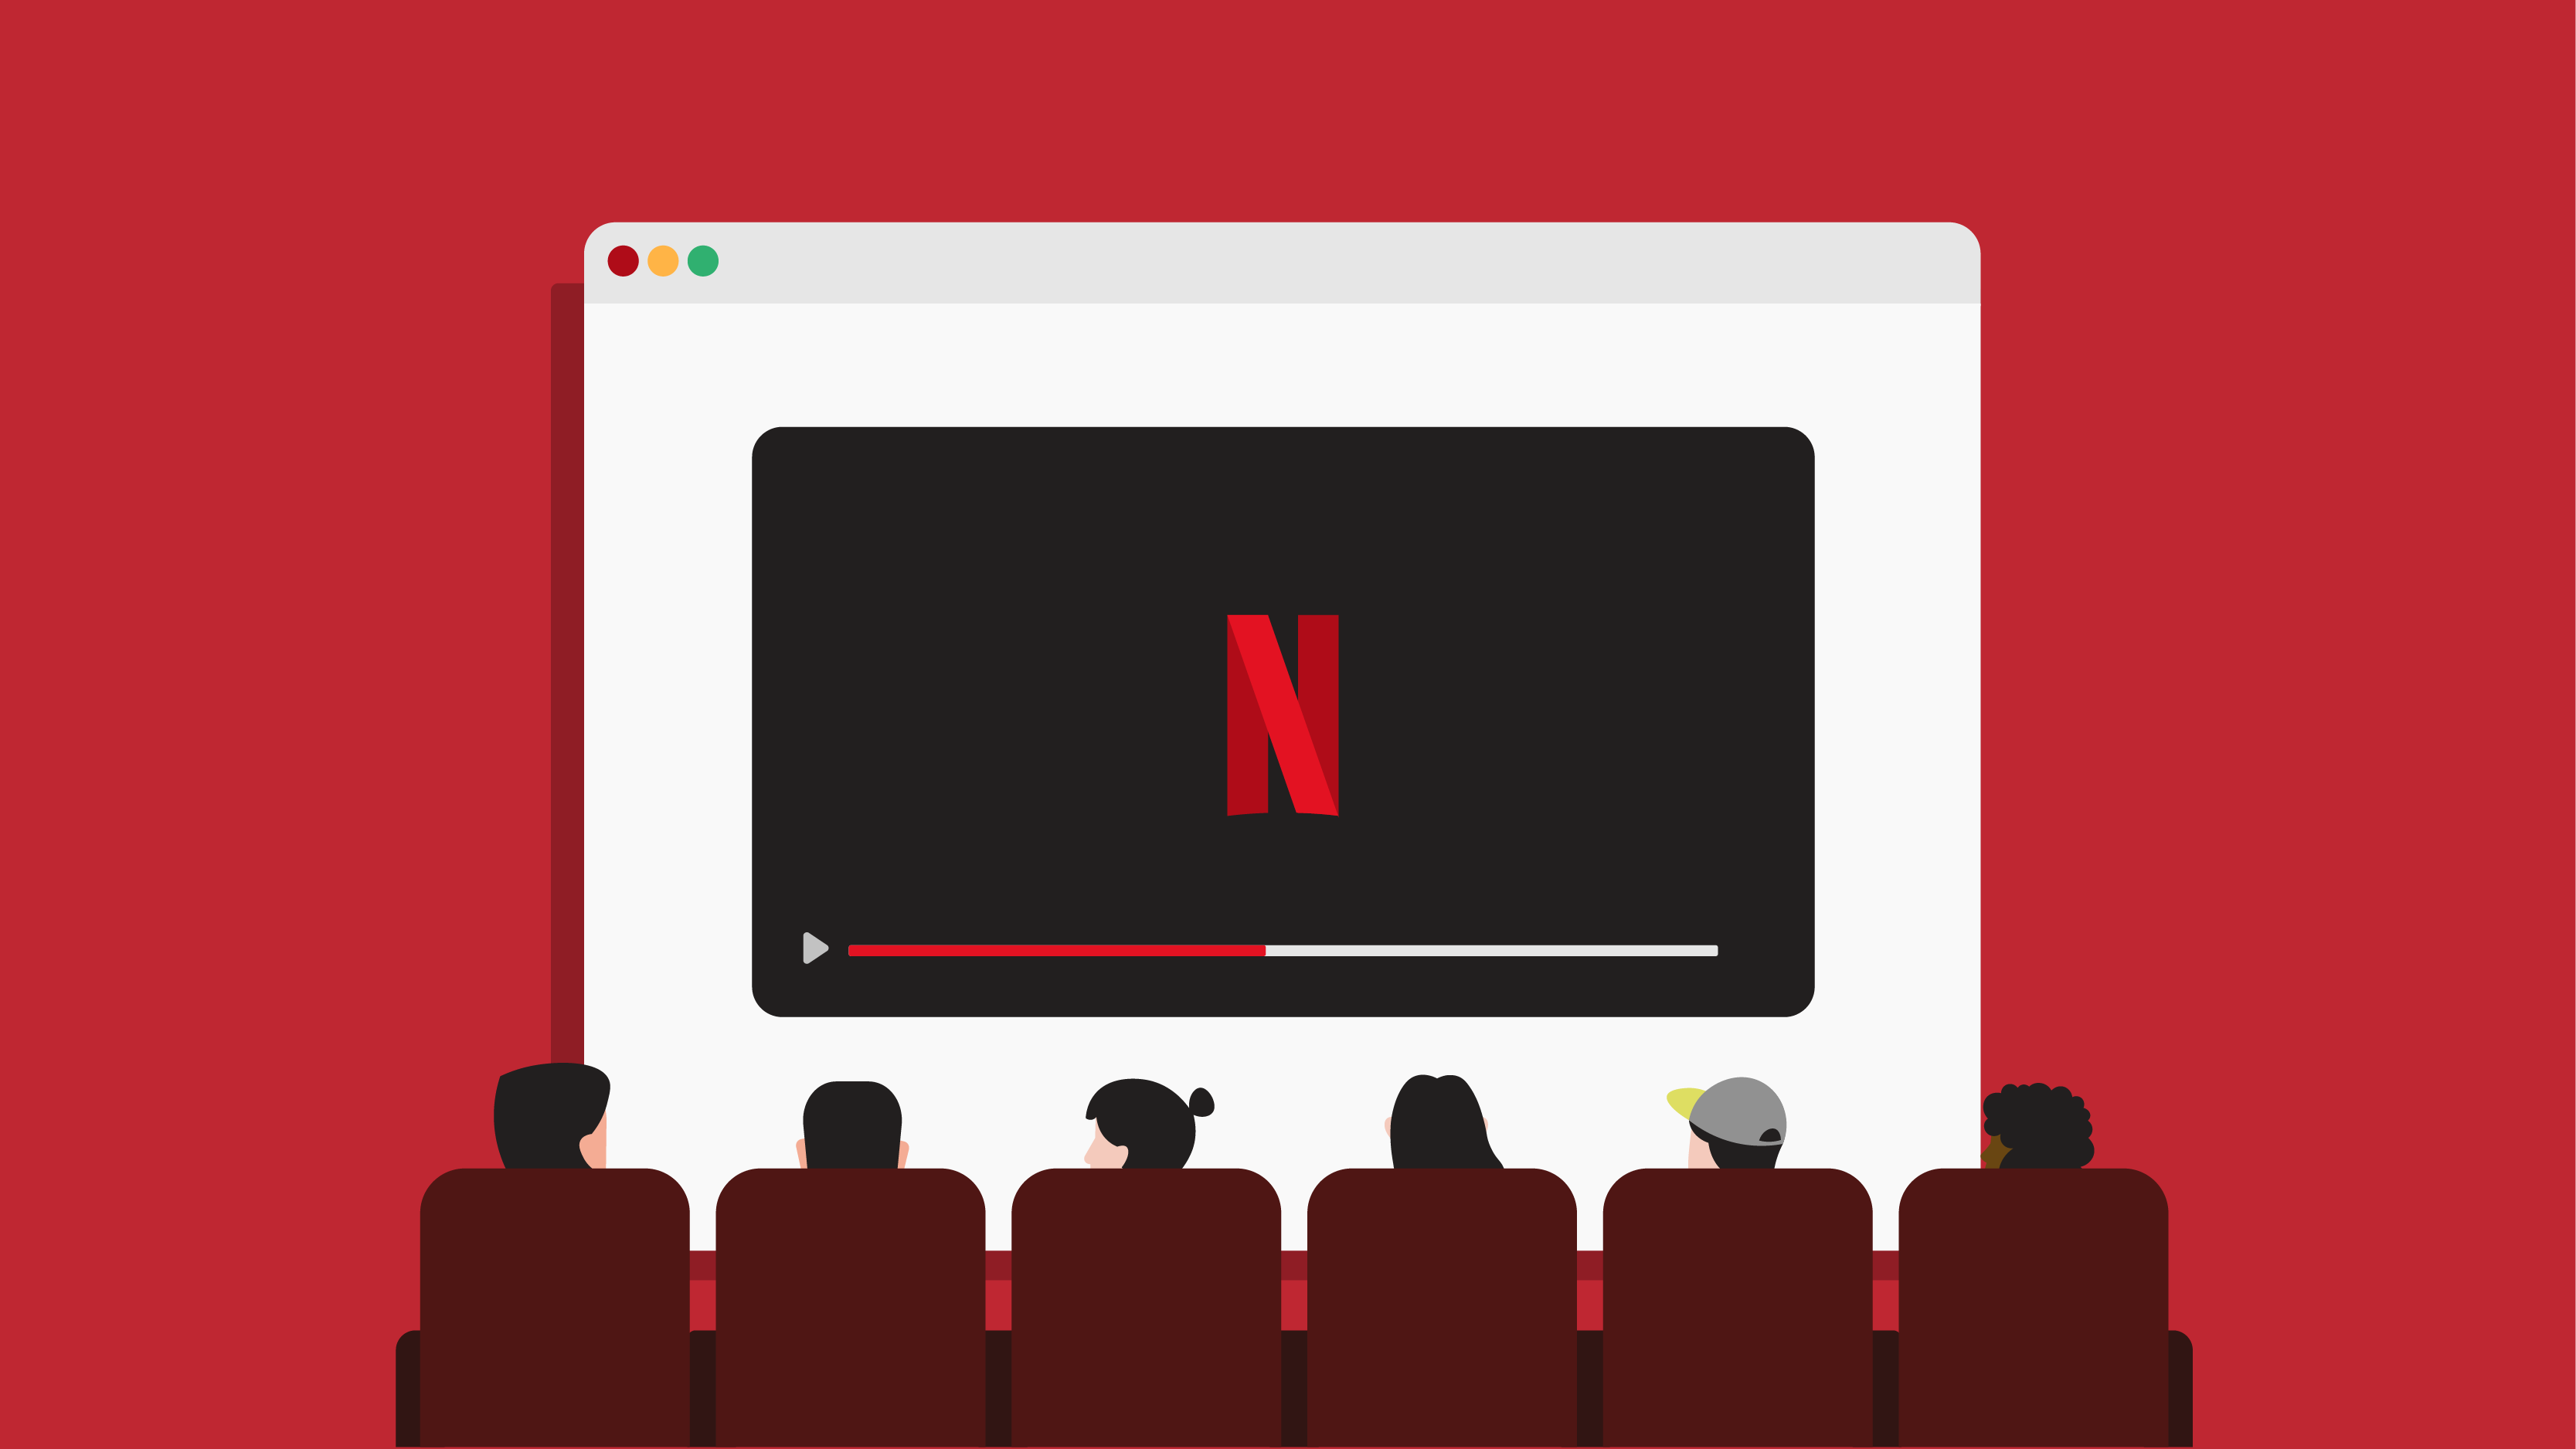 How Netflix streams videos